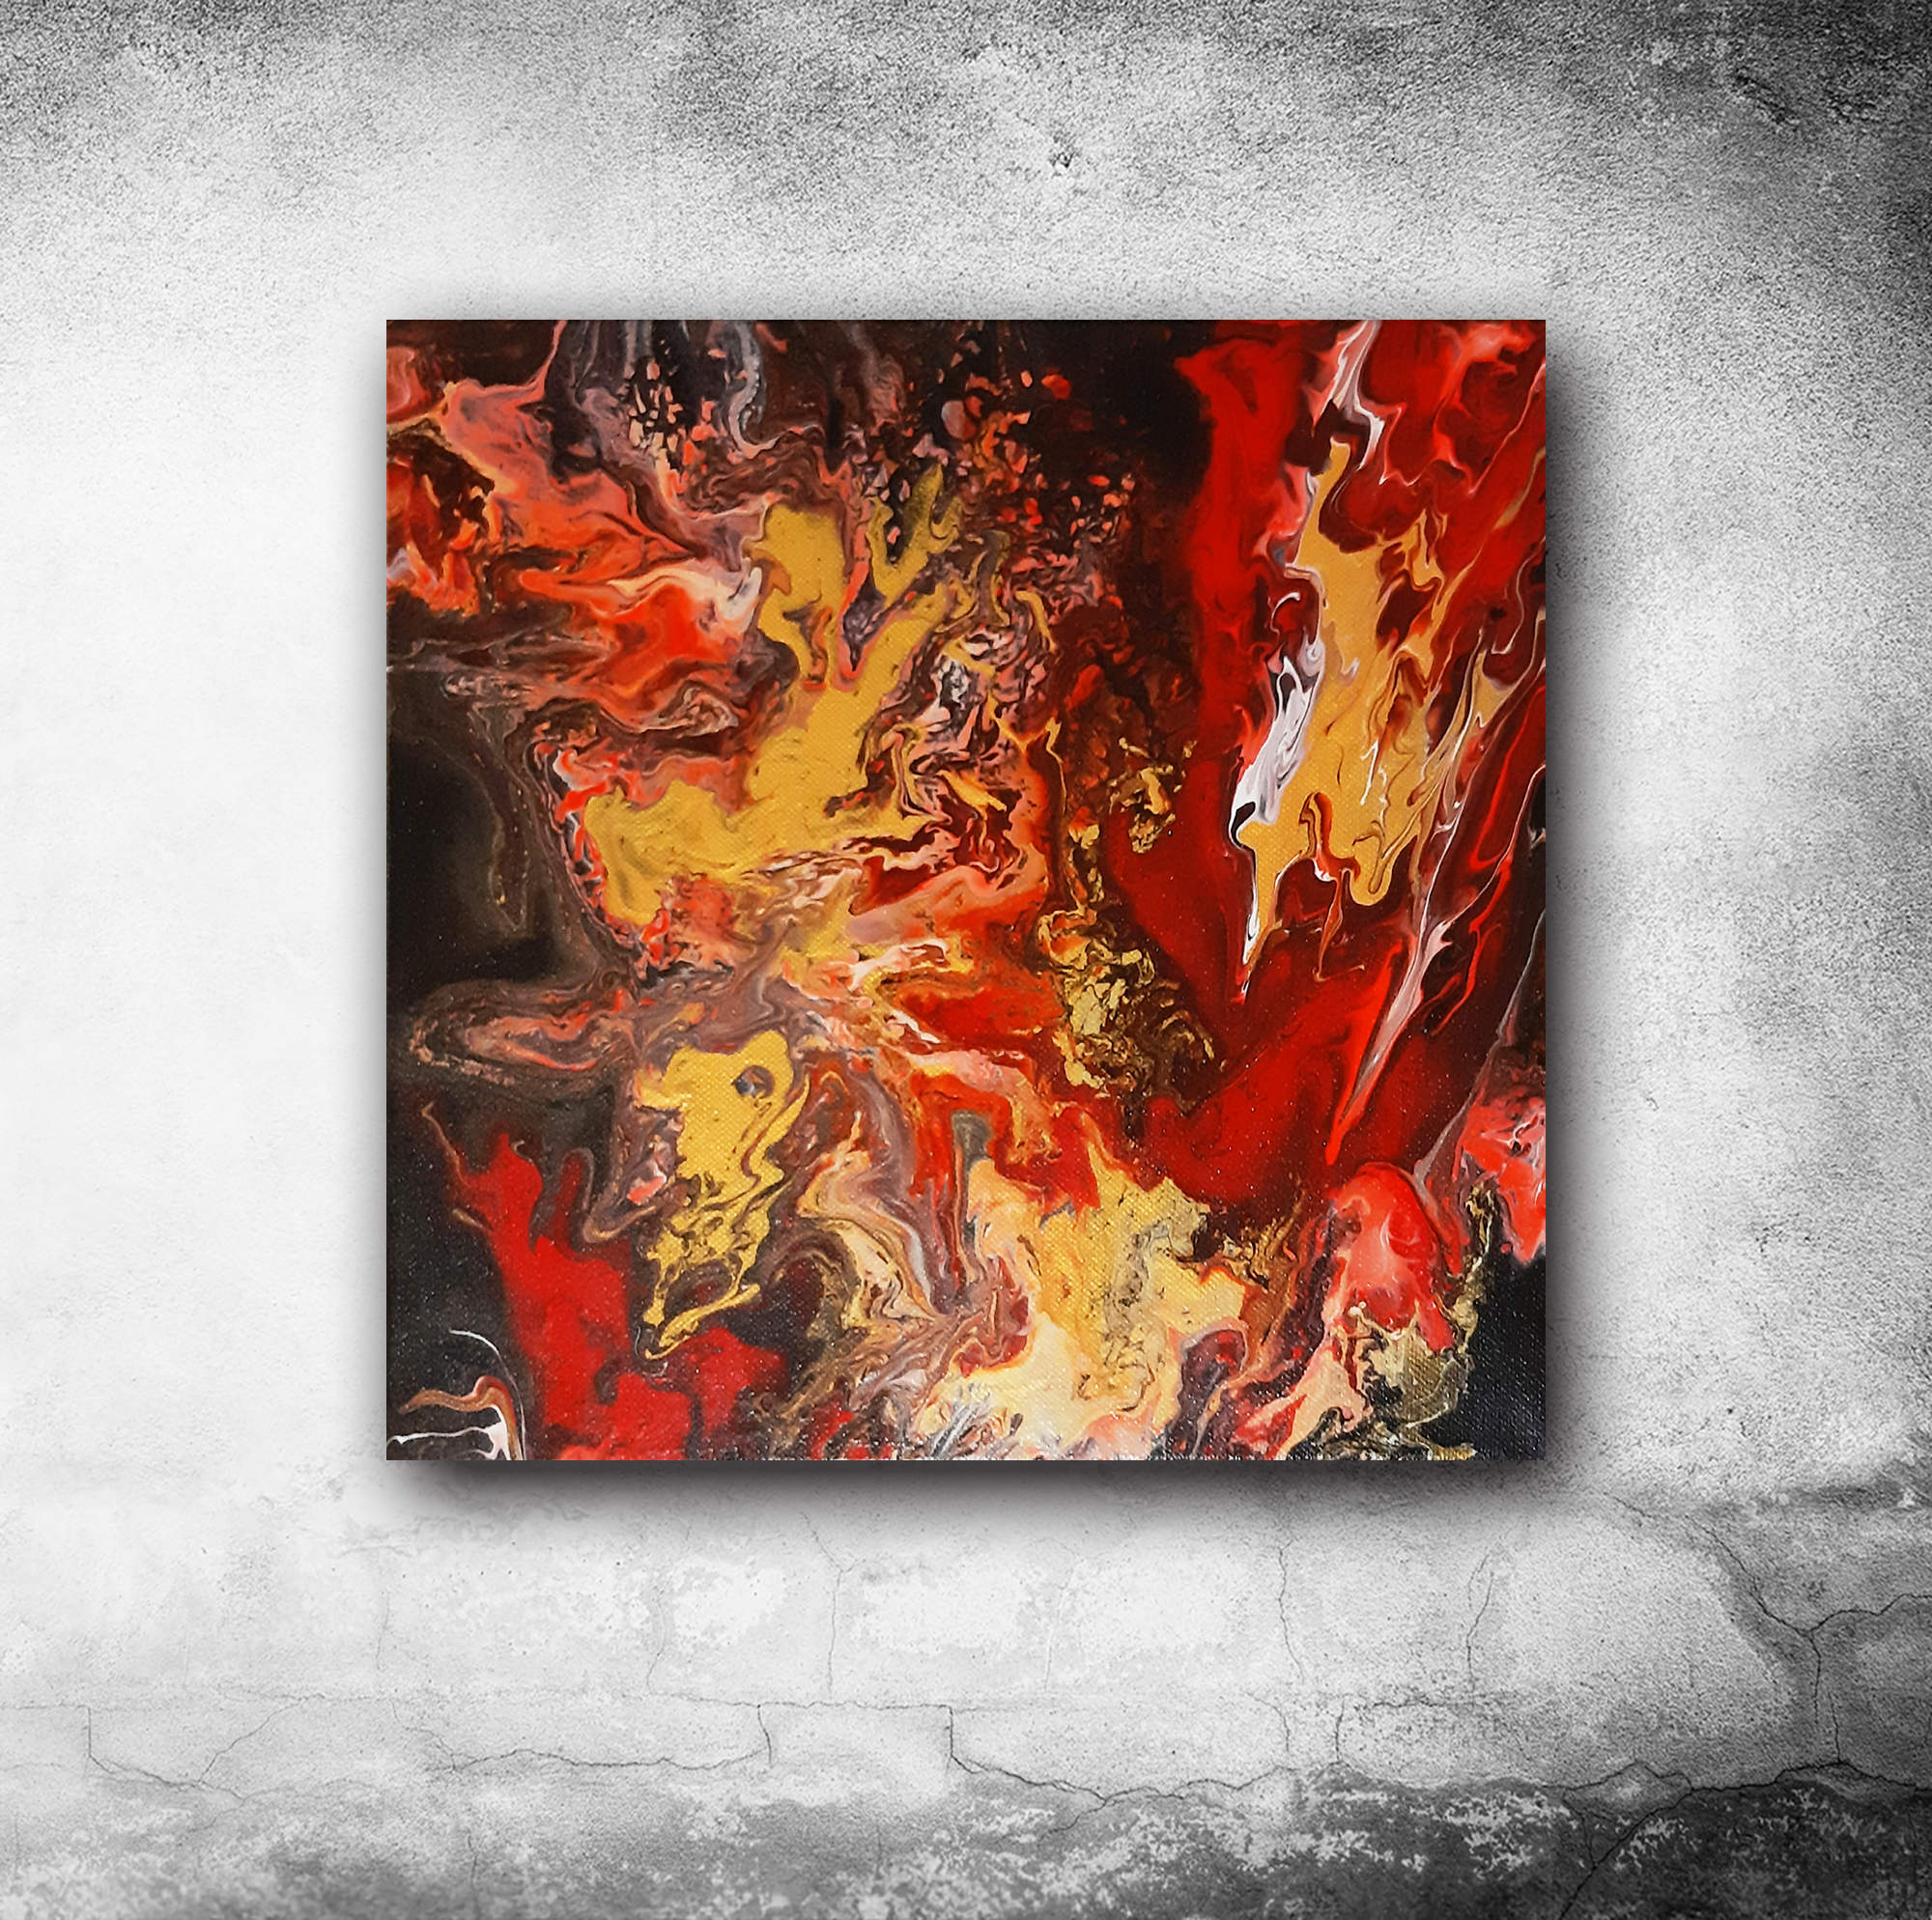 Night fire - acrylic on canvas - cm. 30x30